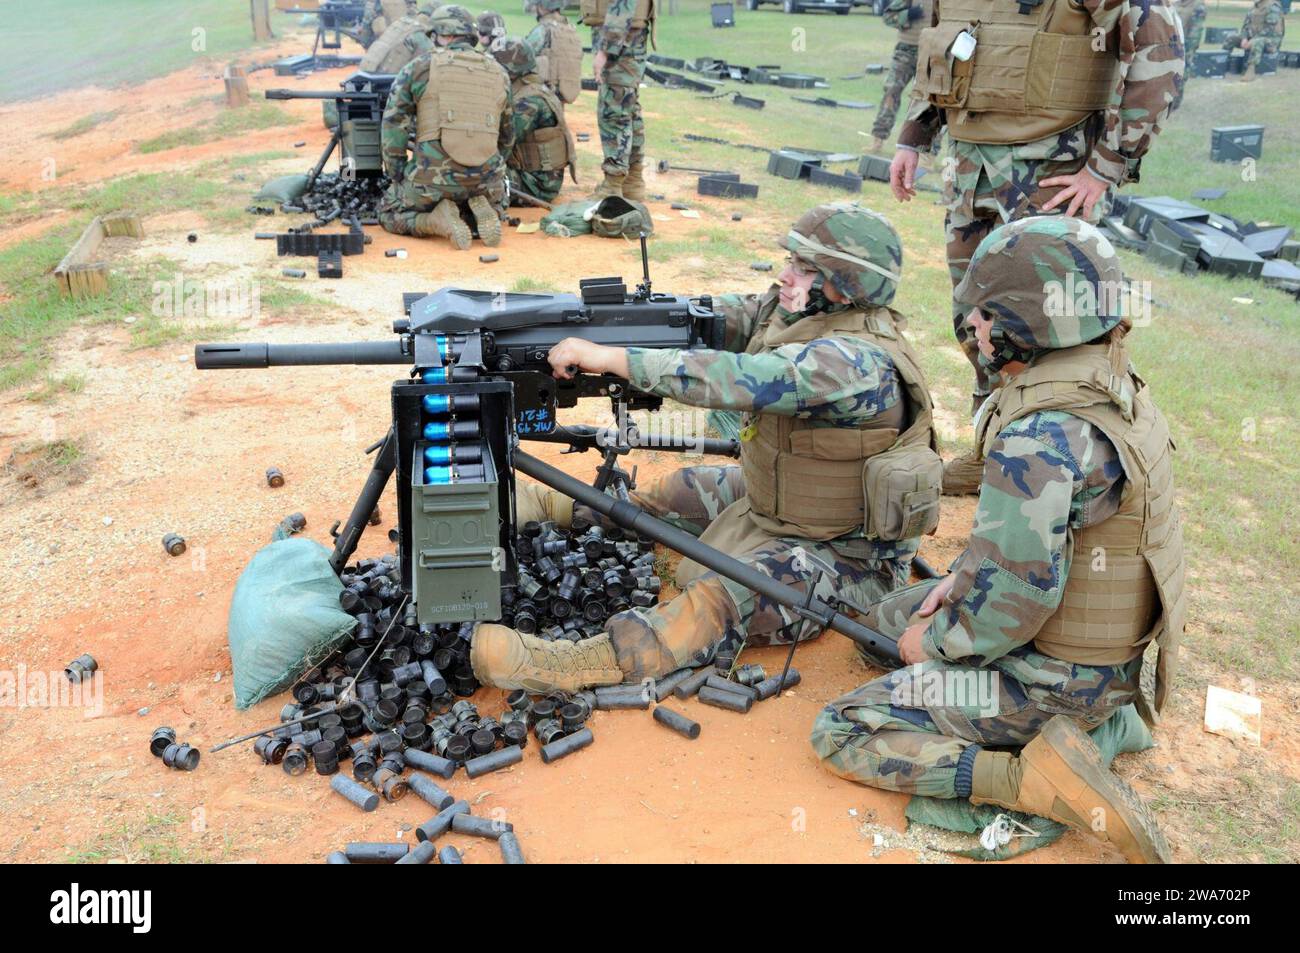 US military forces. 110902UH337-188 - NMCB 11 at MK19 firing range (Image 21 of 27). Stock Photo